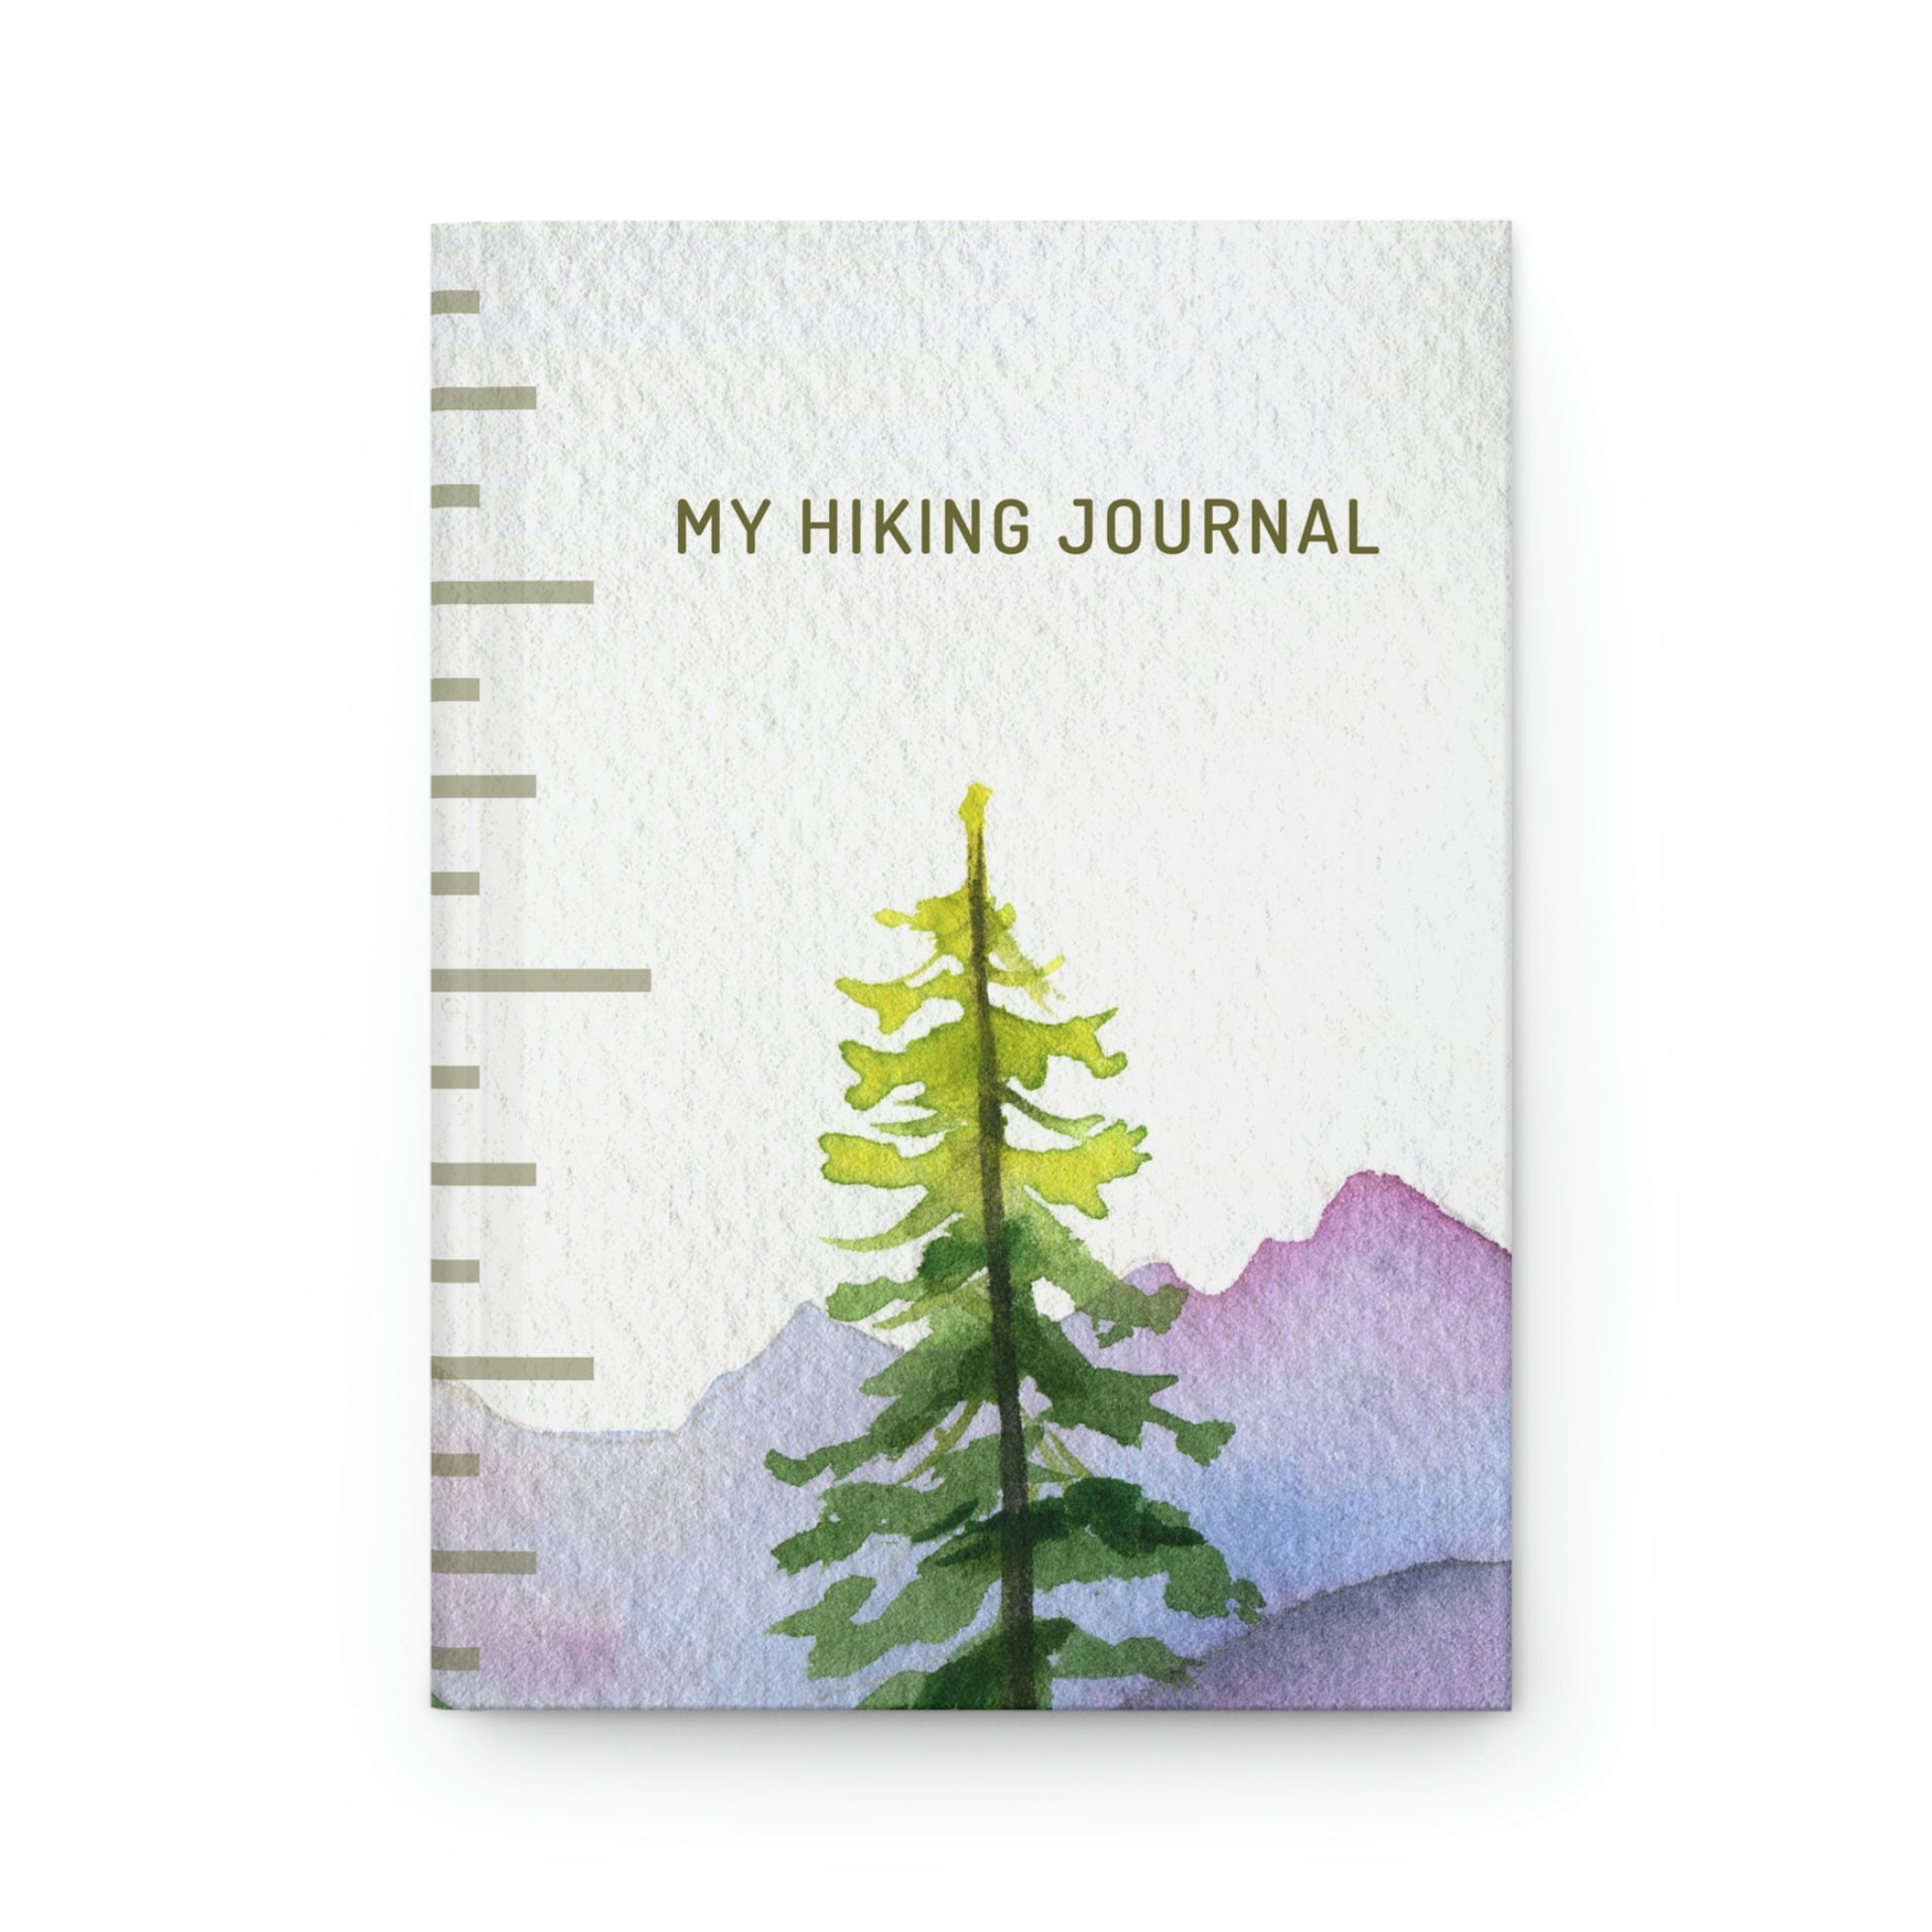 Hiking Journal, Journal for Hiking, Journal for Hikers, Hardcover Journal, Hardcover journal for hiking, Hiking Log Journal